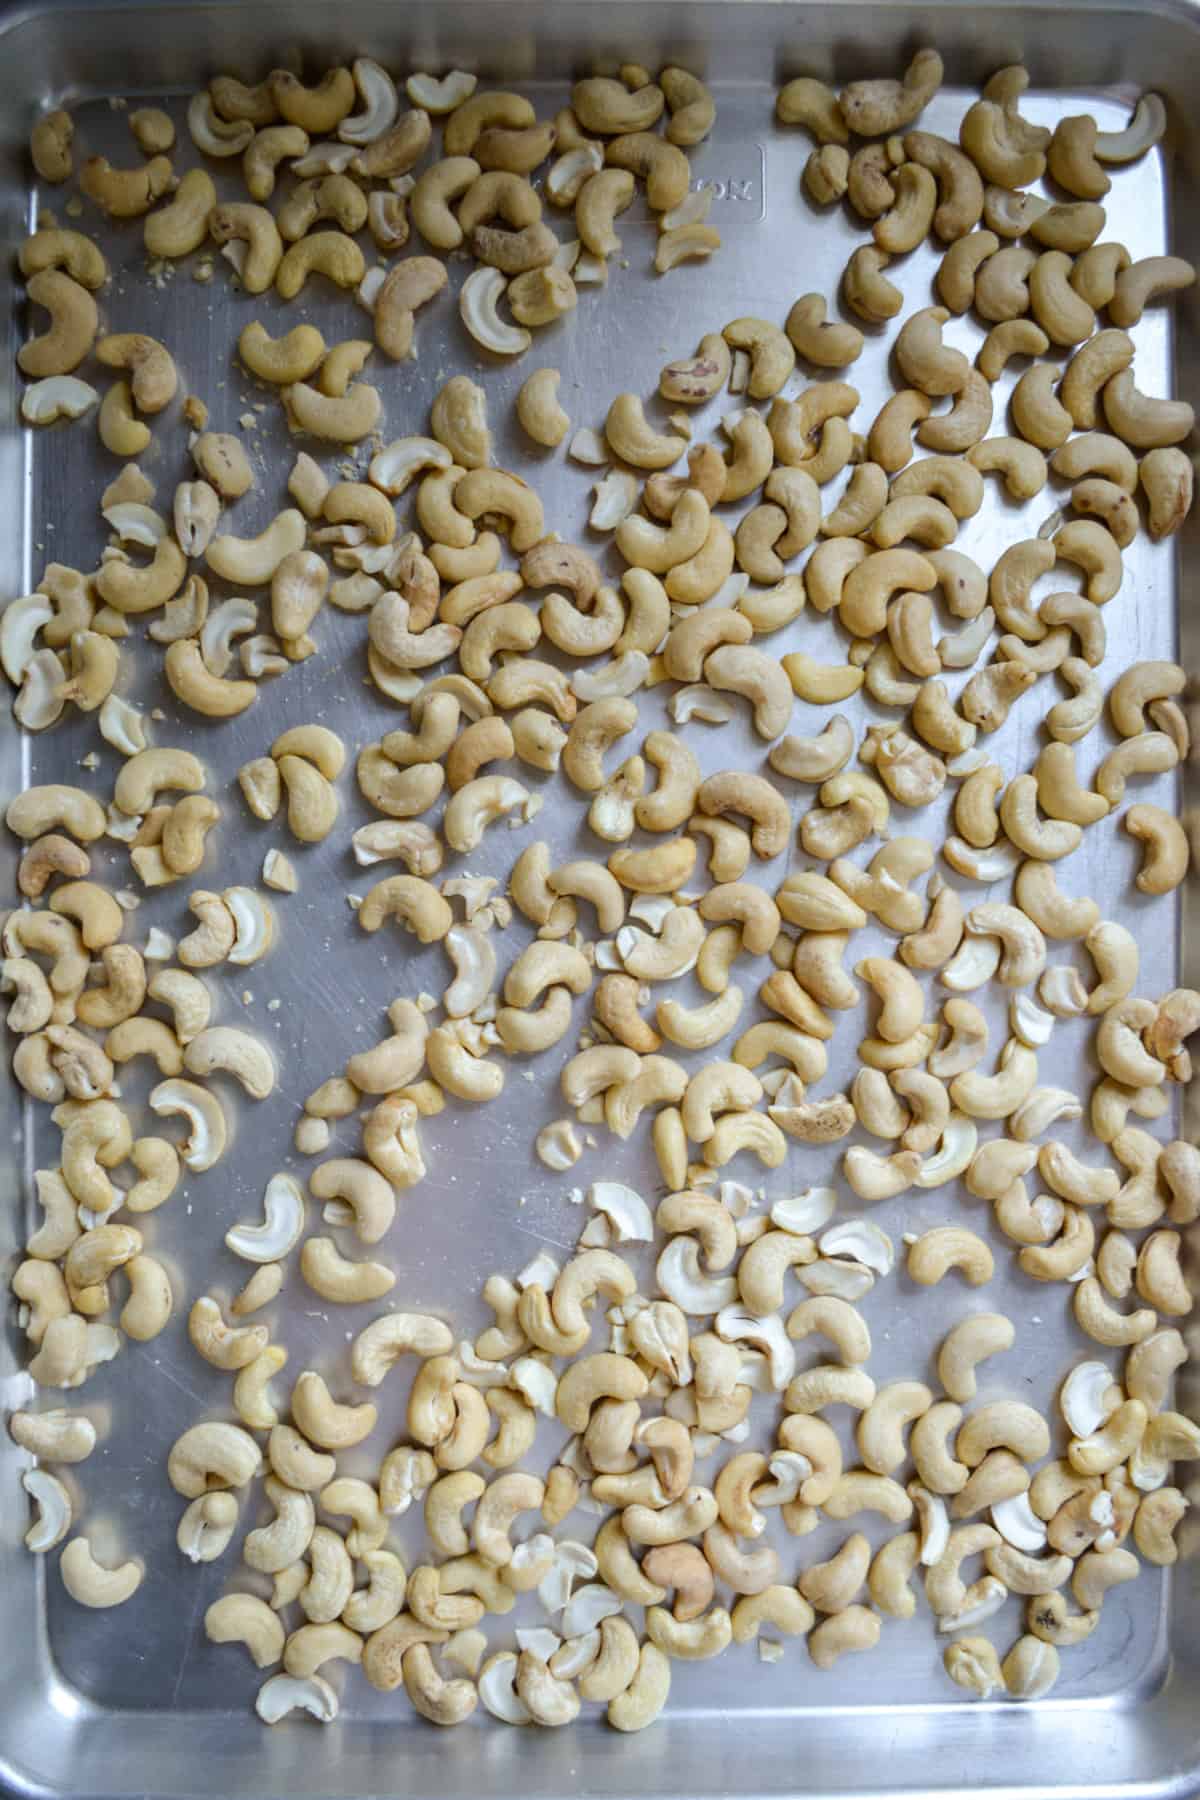 Raw cashews on a baking sheet.